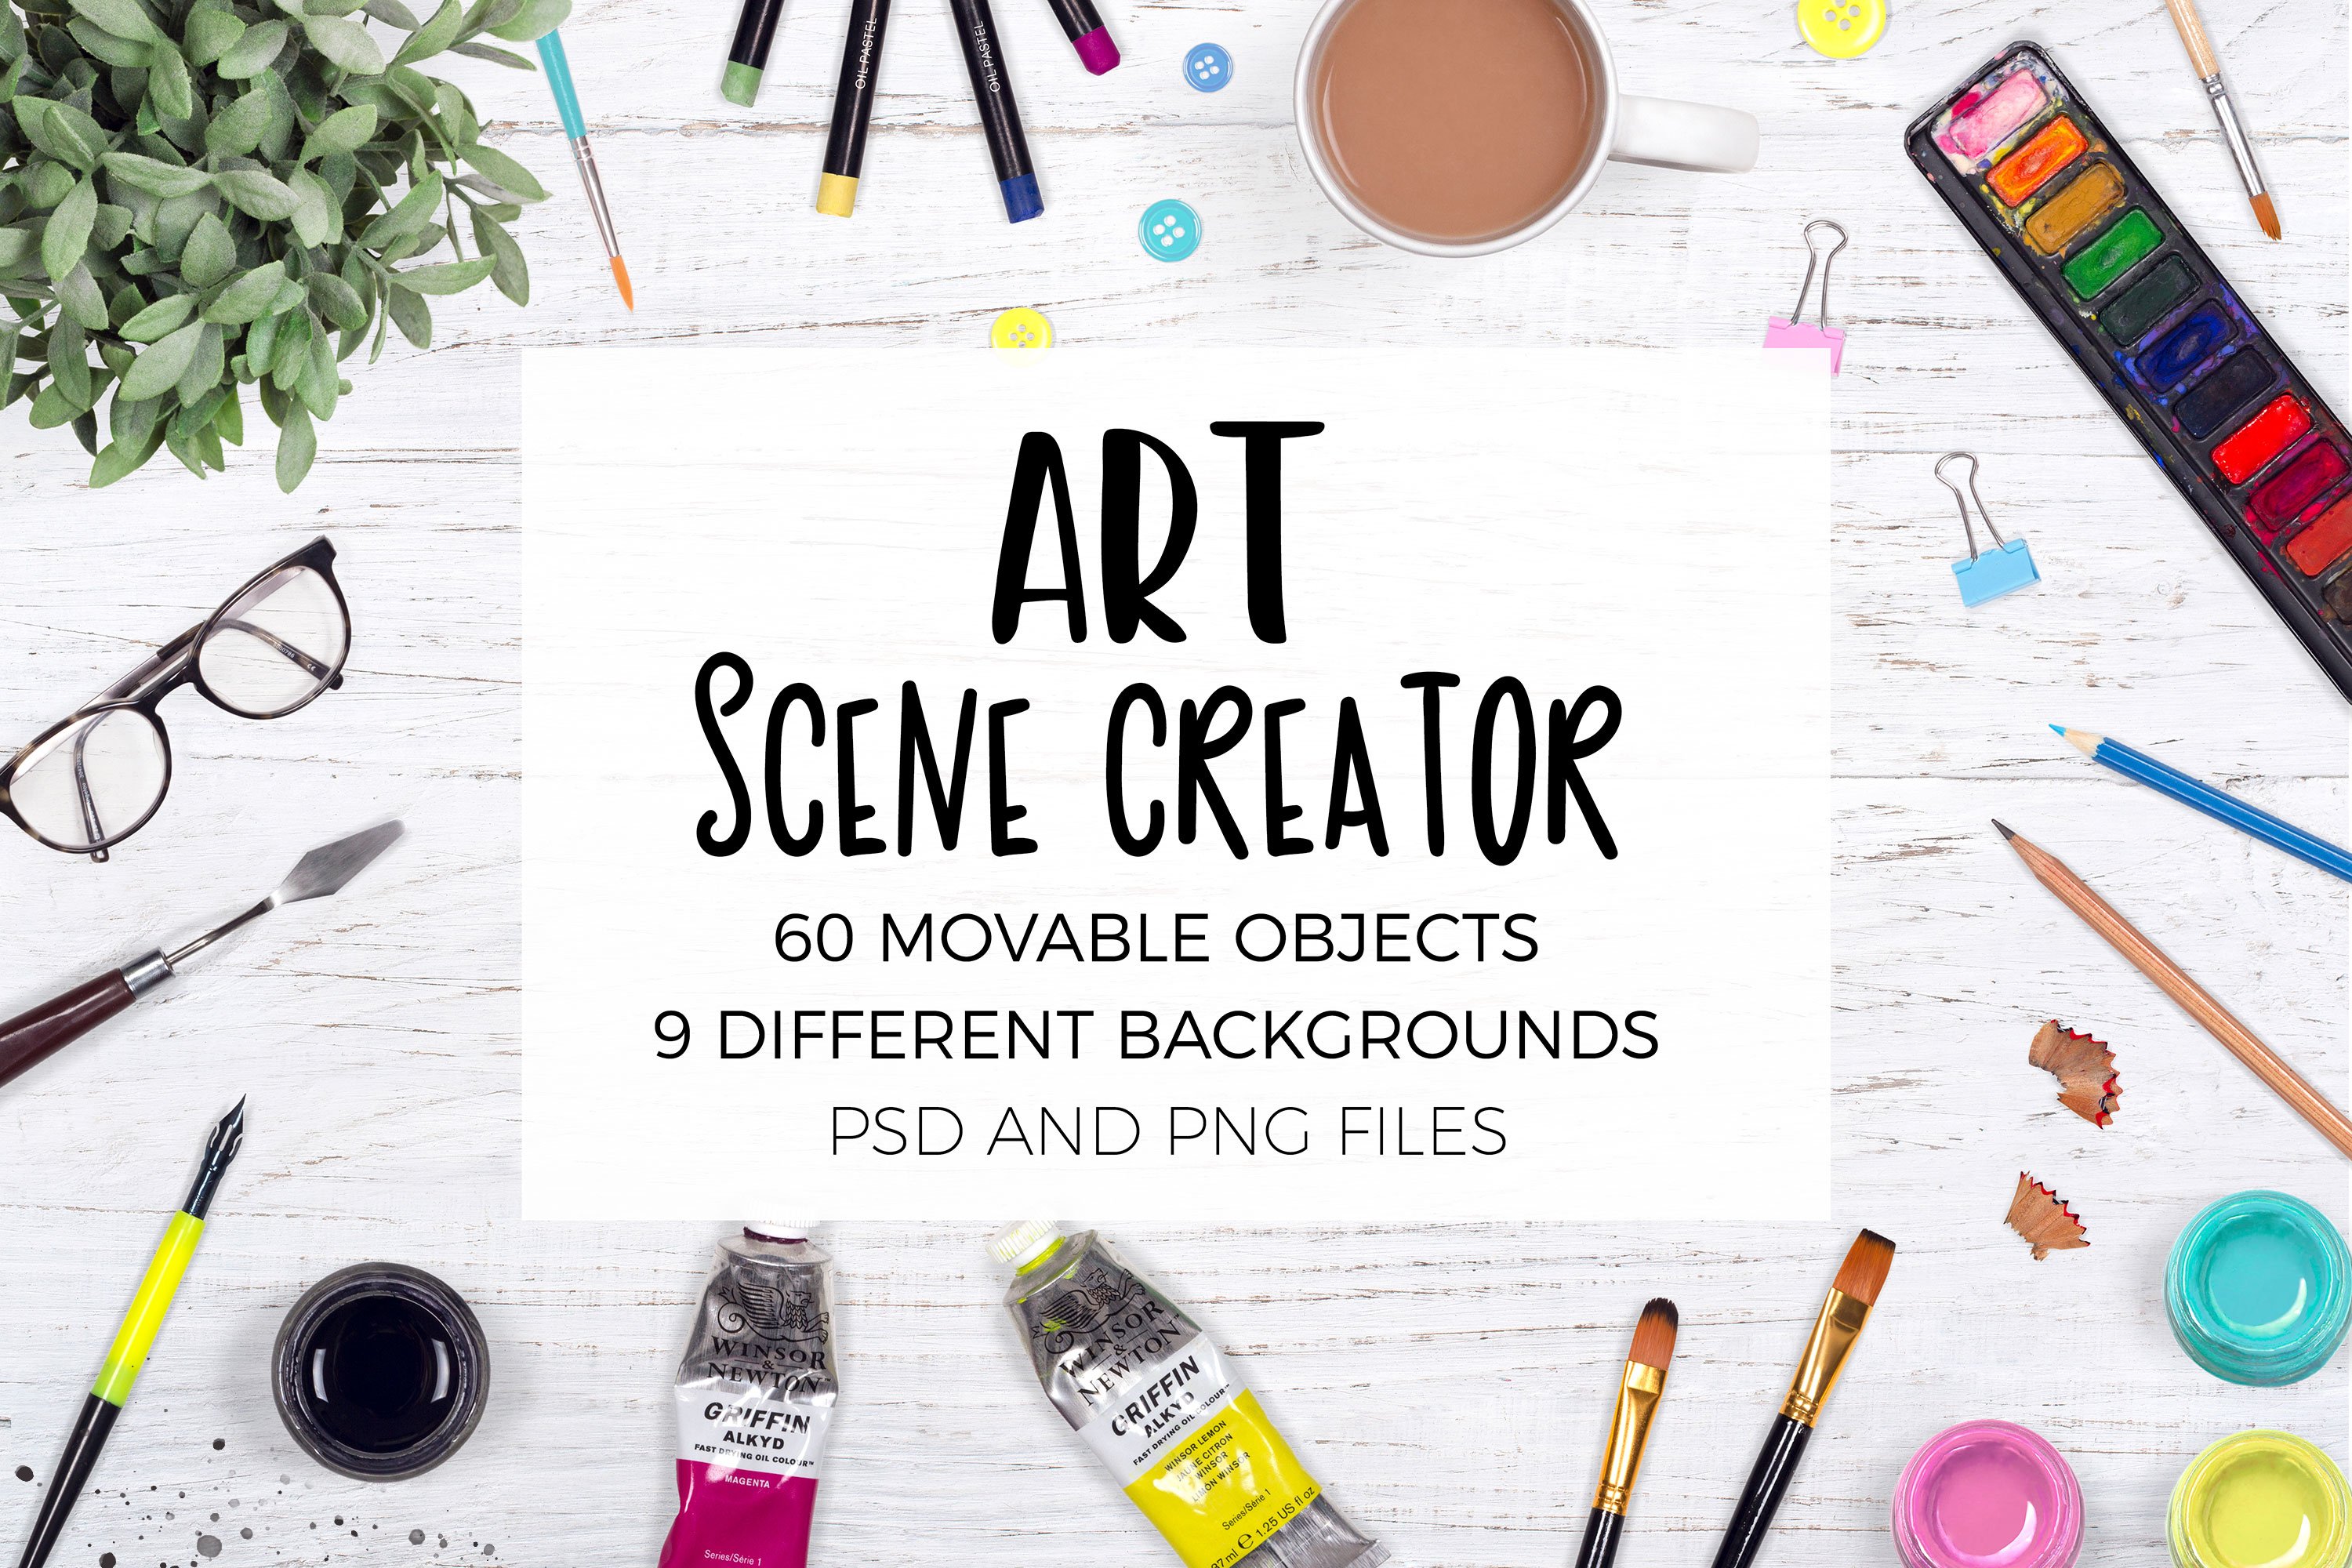 Art Scene Creator - Top View cover image.